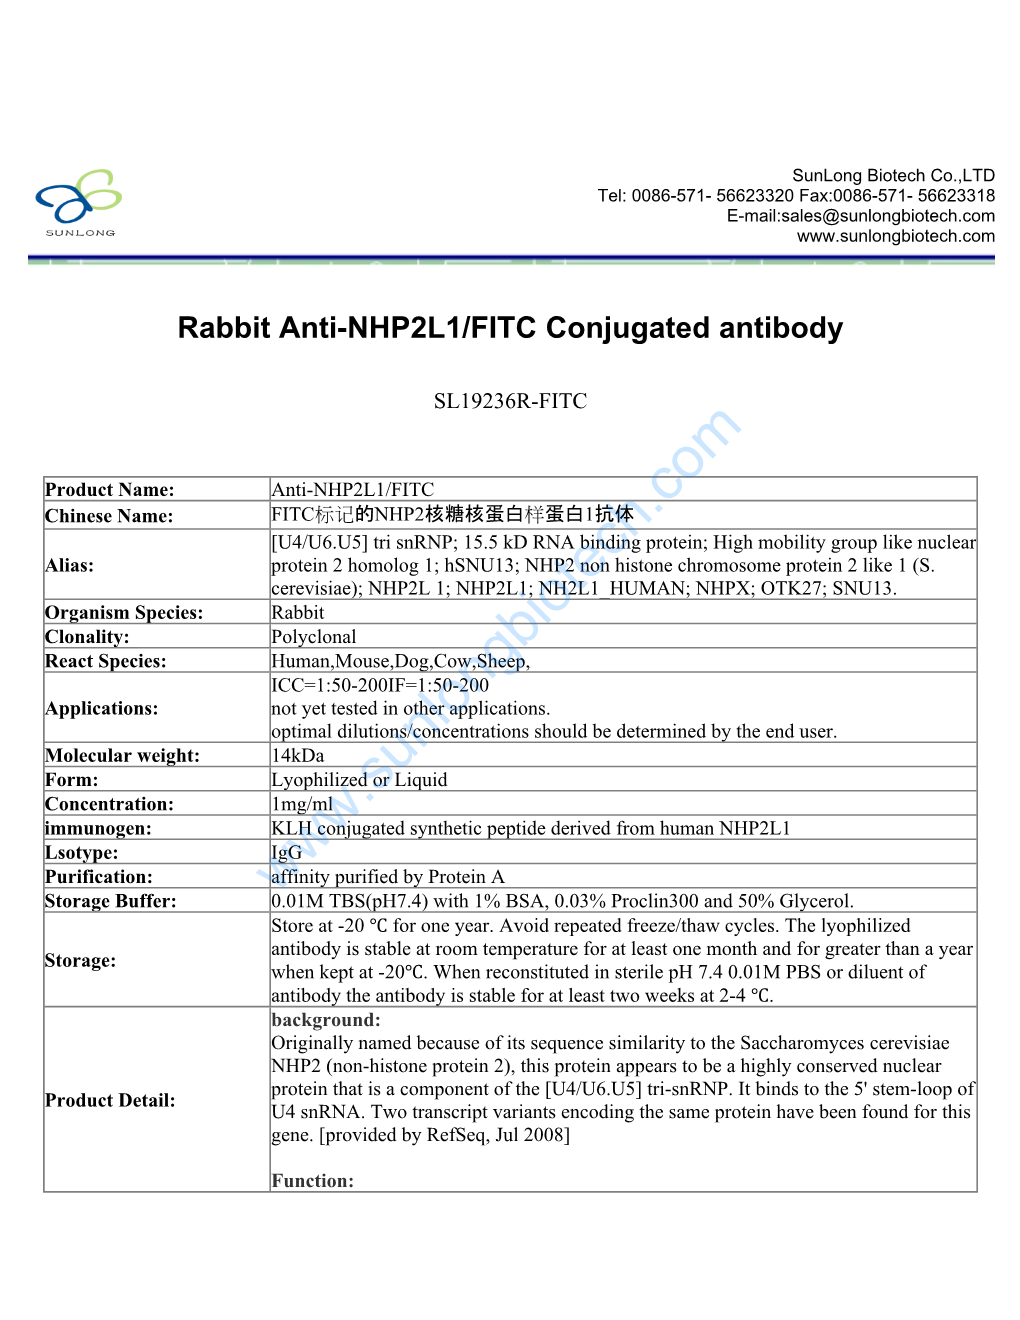 Rabbit Anti-NHP2L1/FITC Conjugated Antibody-SL19236R-FITC